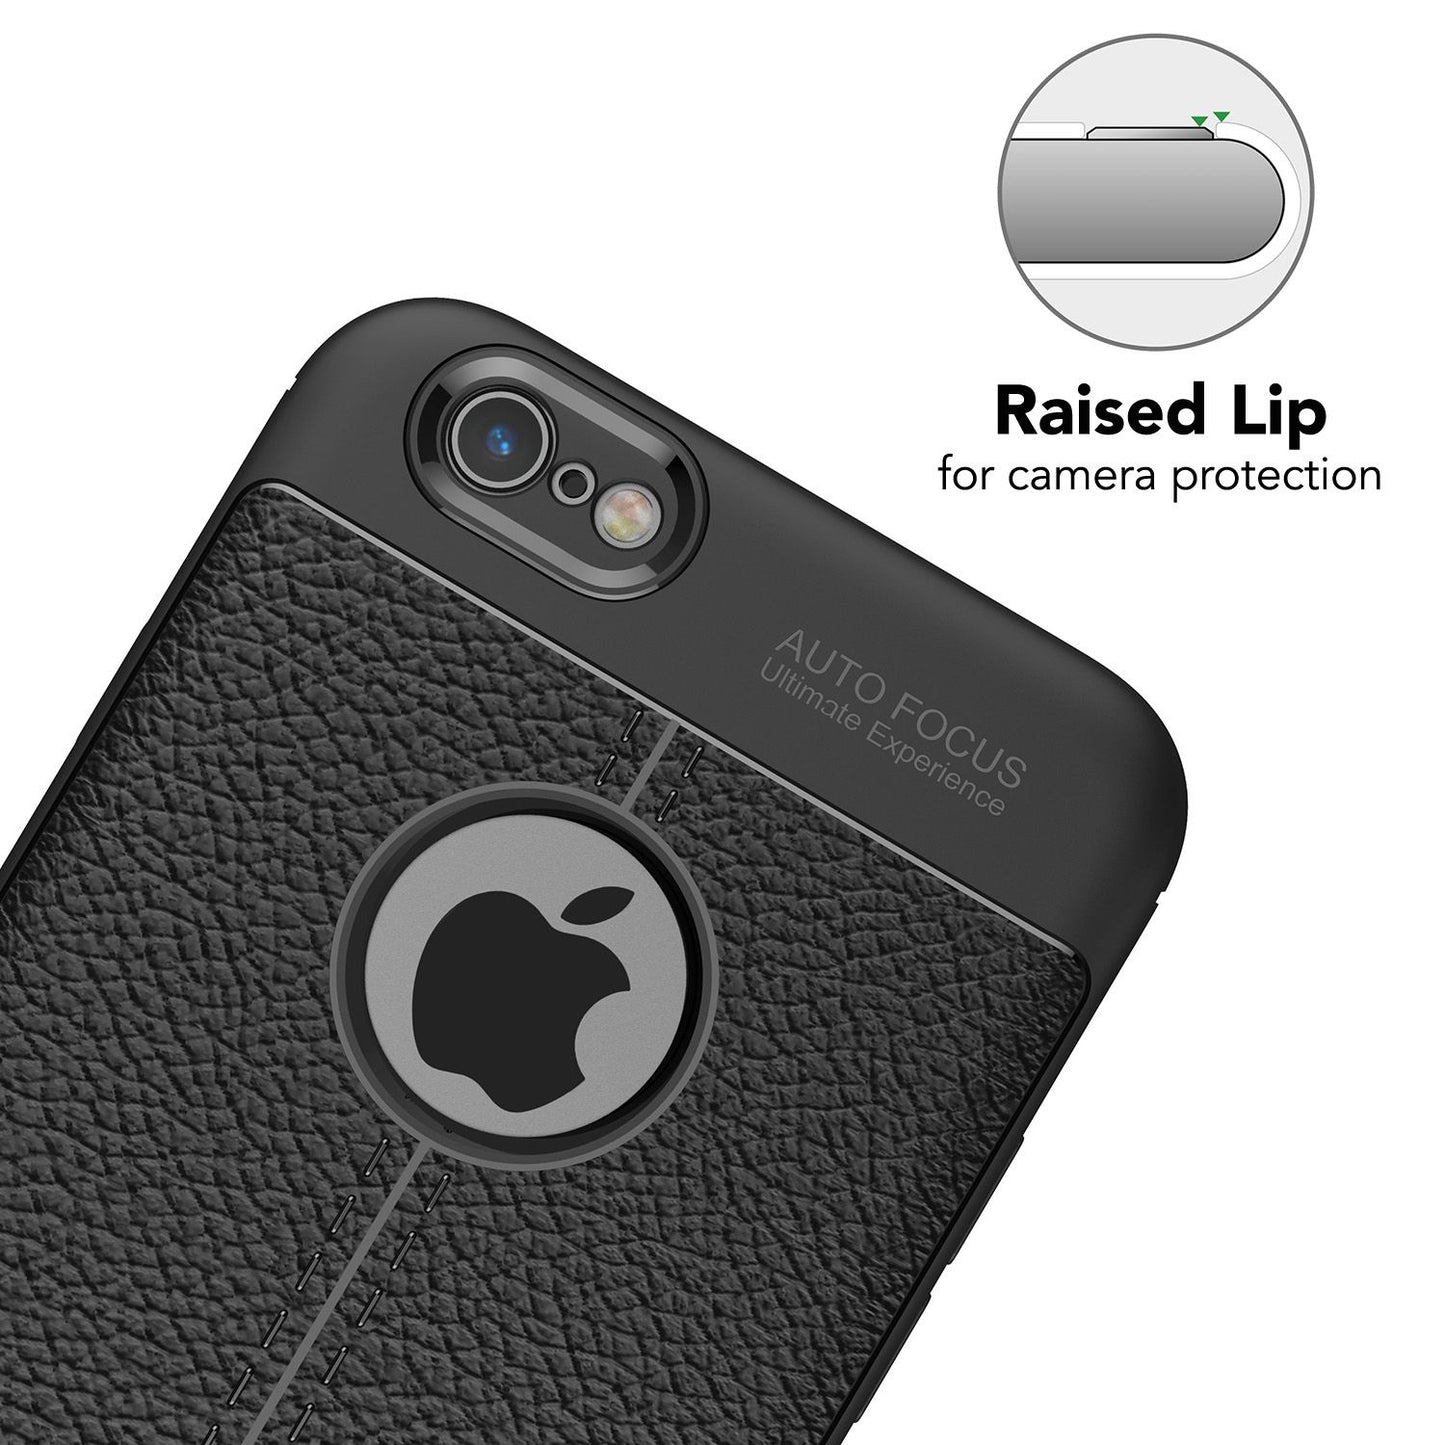 NALIA Handy Hülle für Apple iPhone 6 Plus 6S Plus, Leder Look Silikon Cover Case